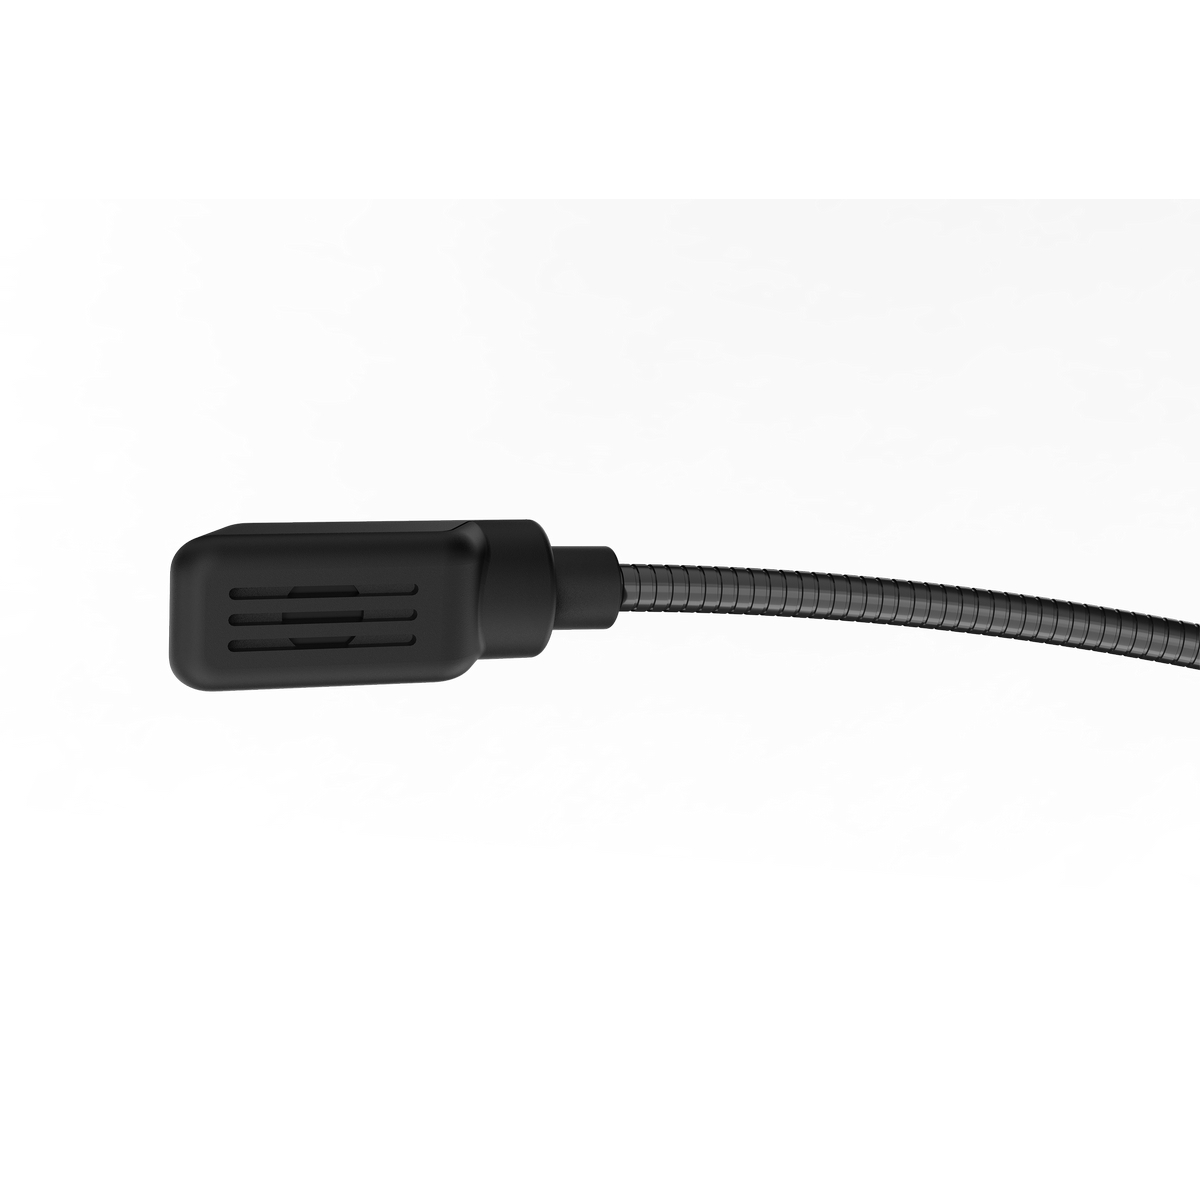  - CORSAIR HS60 PRO SURROUND Gaming Headset Carbon/Black (CA-9011213-EU)